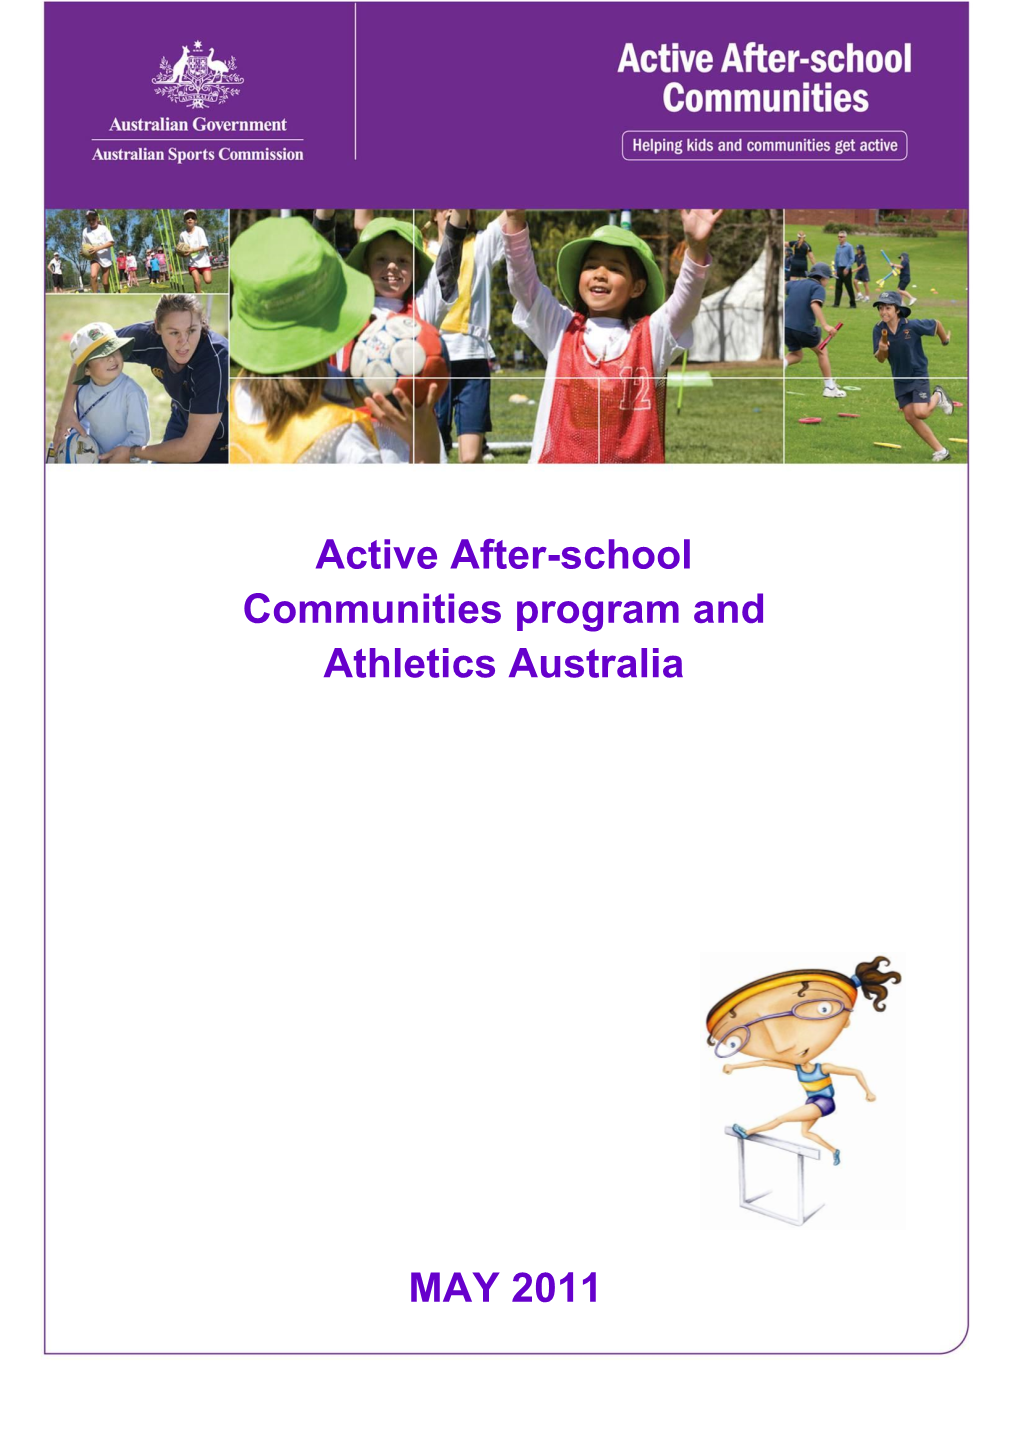 Active After-School Communities Program and Athletics Australia